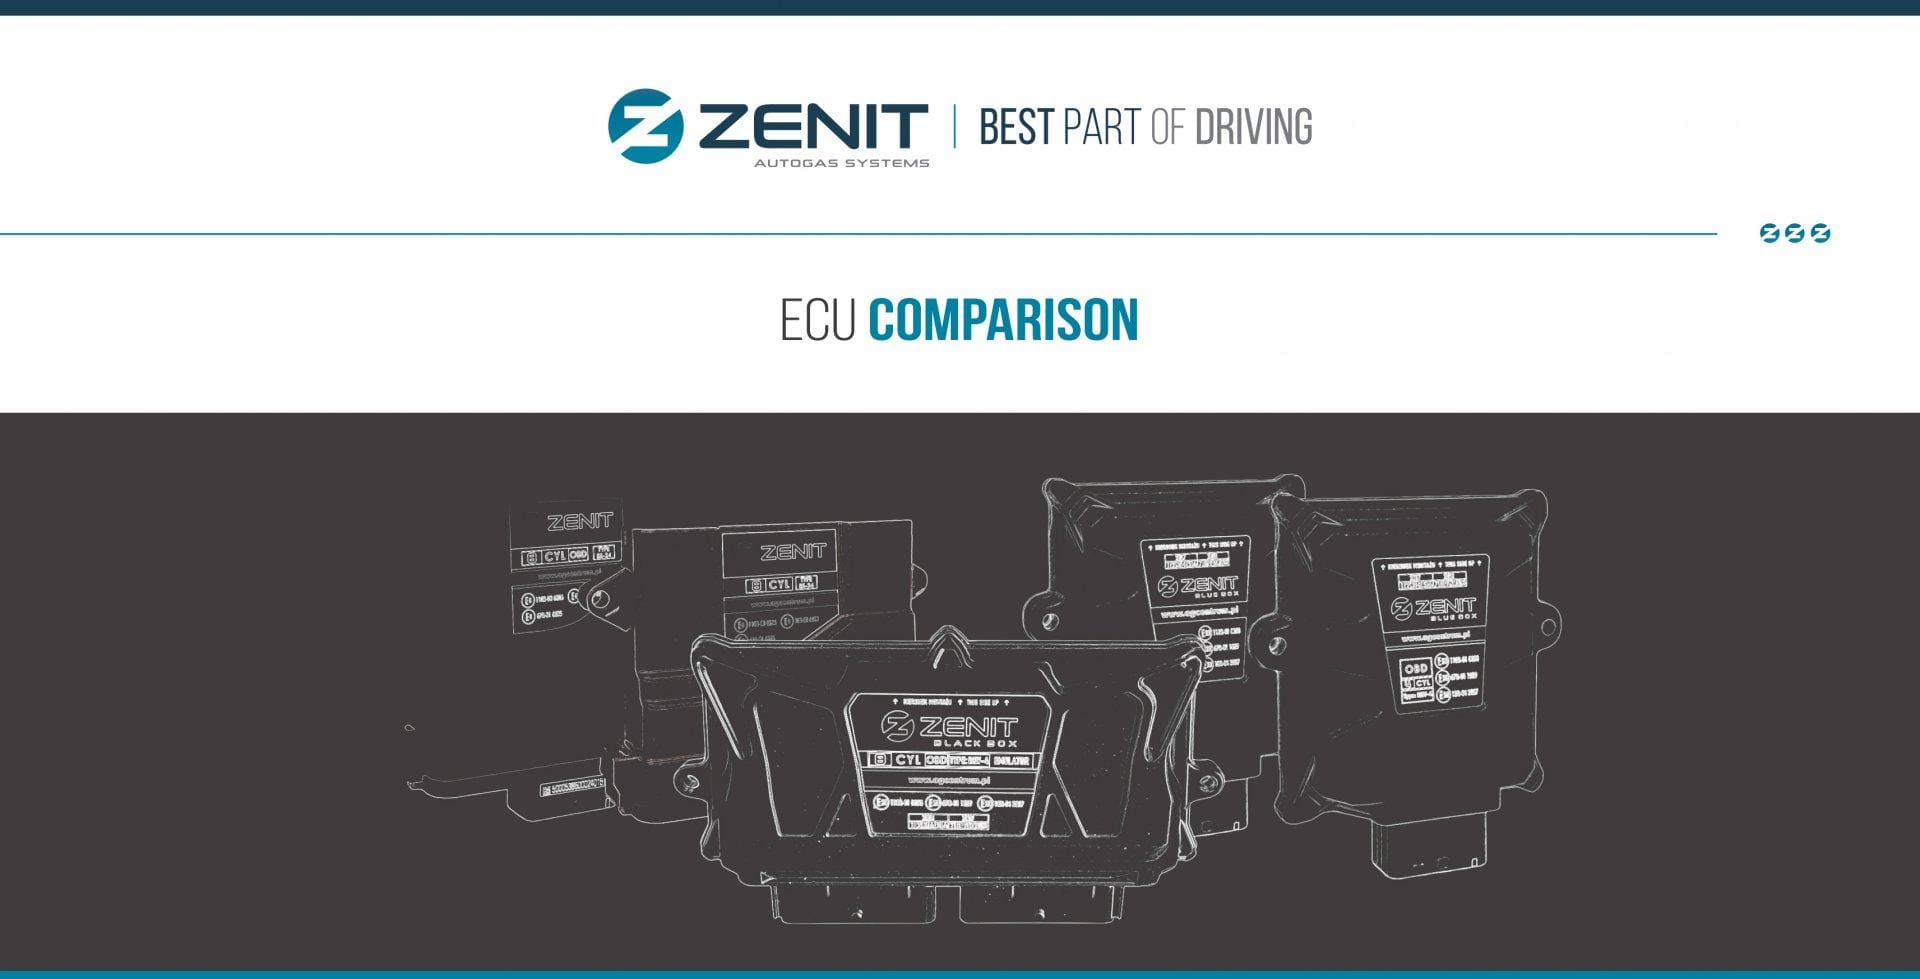 Comparison of Zenit controllers